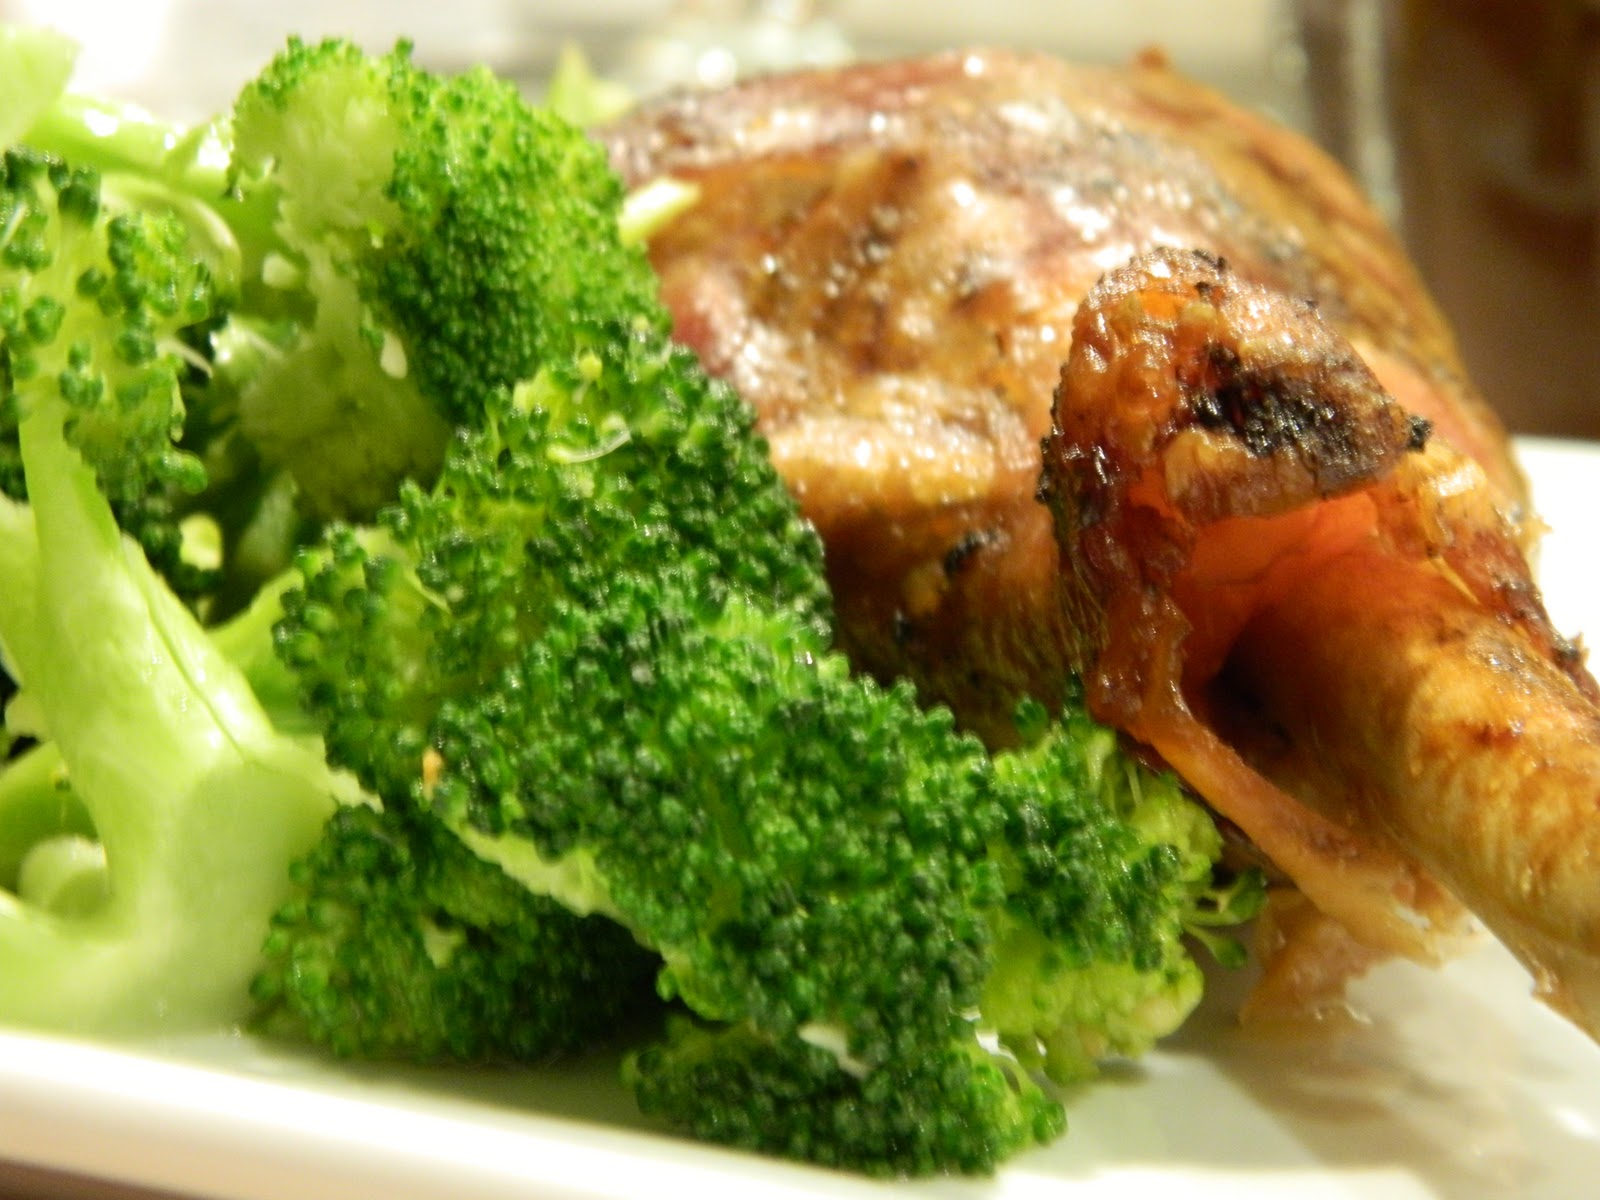 Primal Bites: Slow Cooker Turkey Legs with Lemon Garlic Broccoli